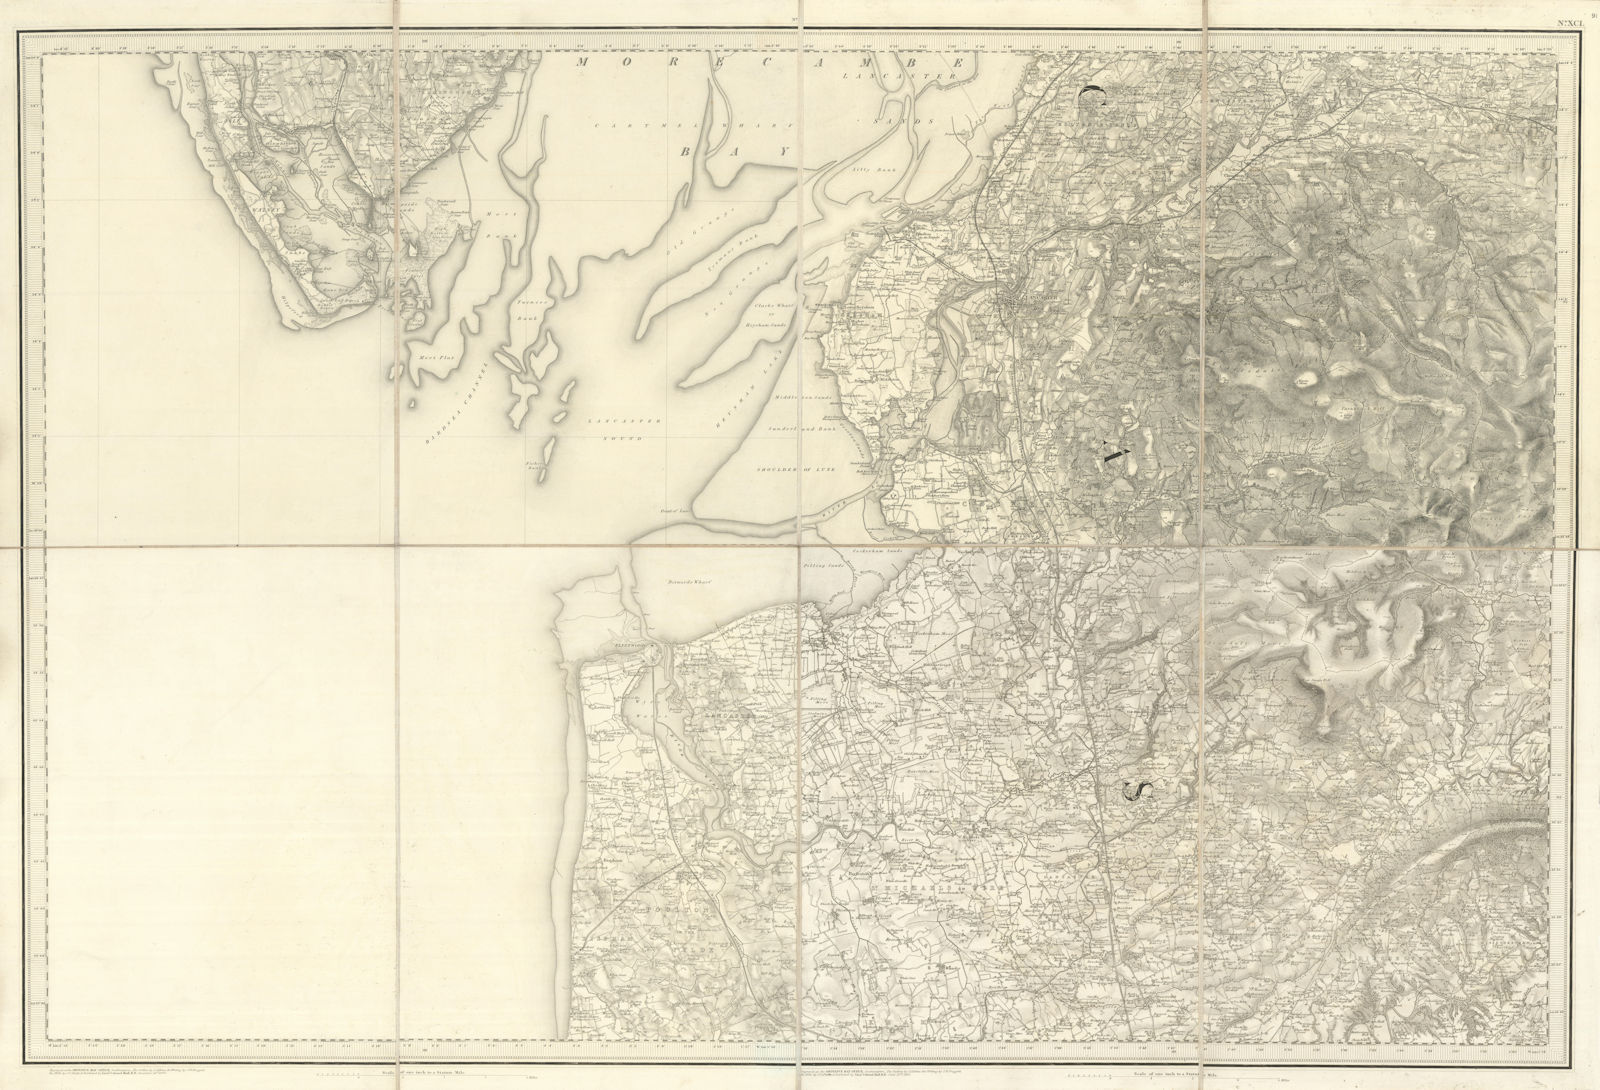 OS #91 Morecambe Bay, Bowland Fells & The Fylde. Barrow Lancaster 1852 old map